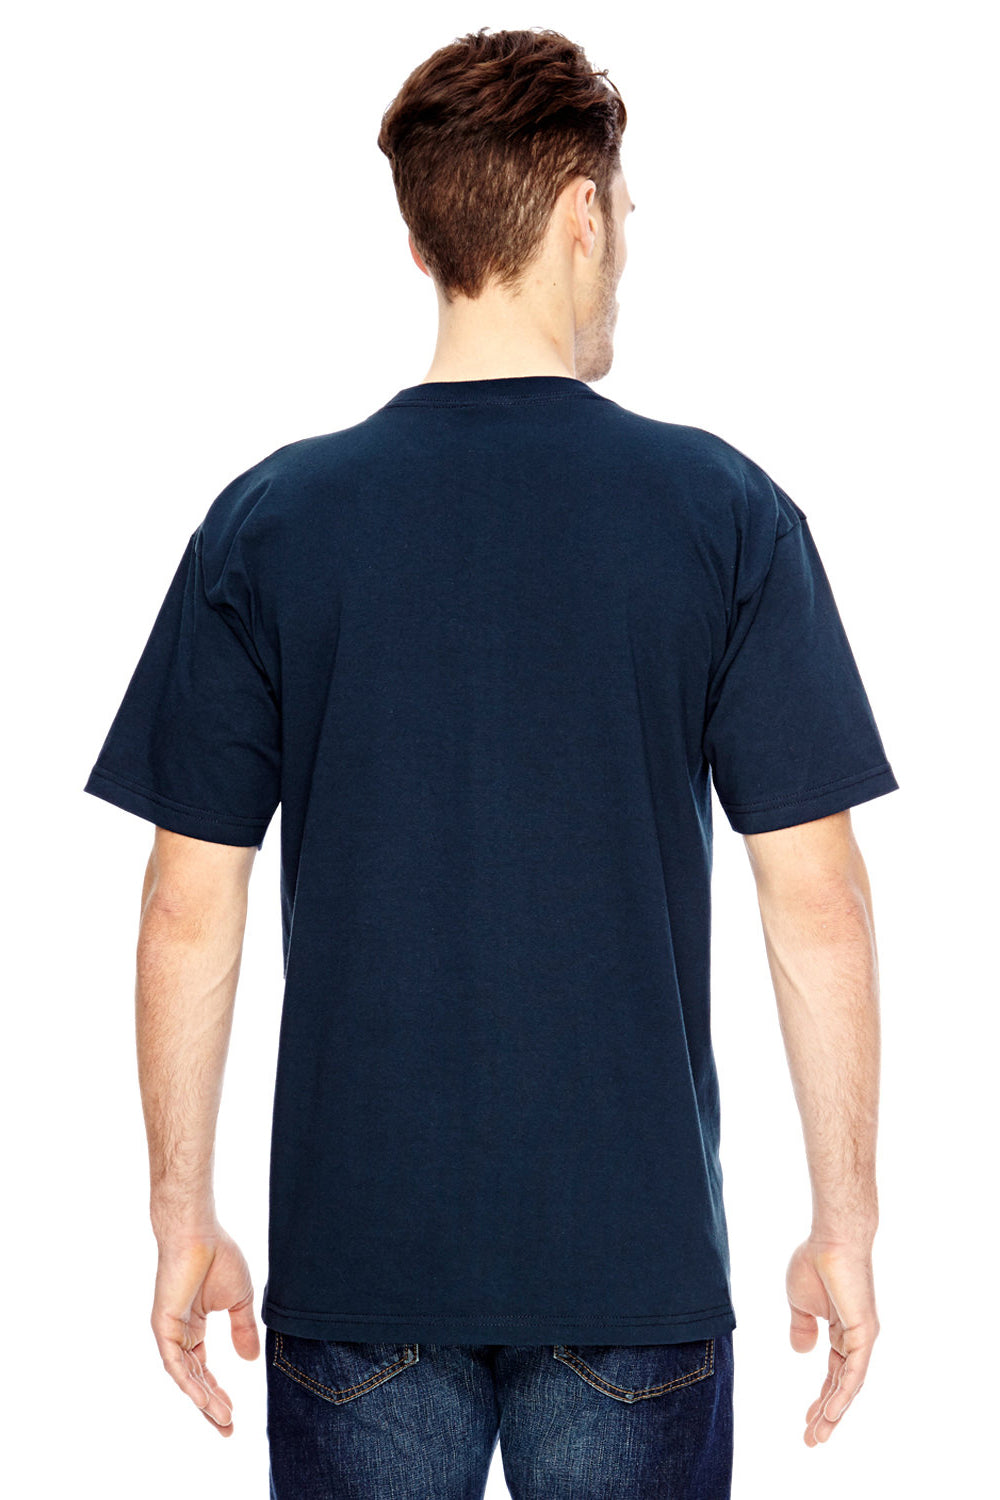 Bayside BA2905 Mens USA Made Short Sleeve Crewneck T-Shirt Navy Blue Model Back